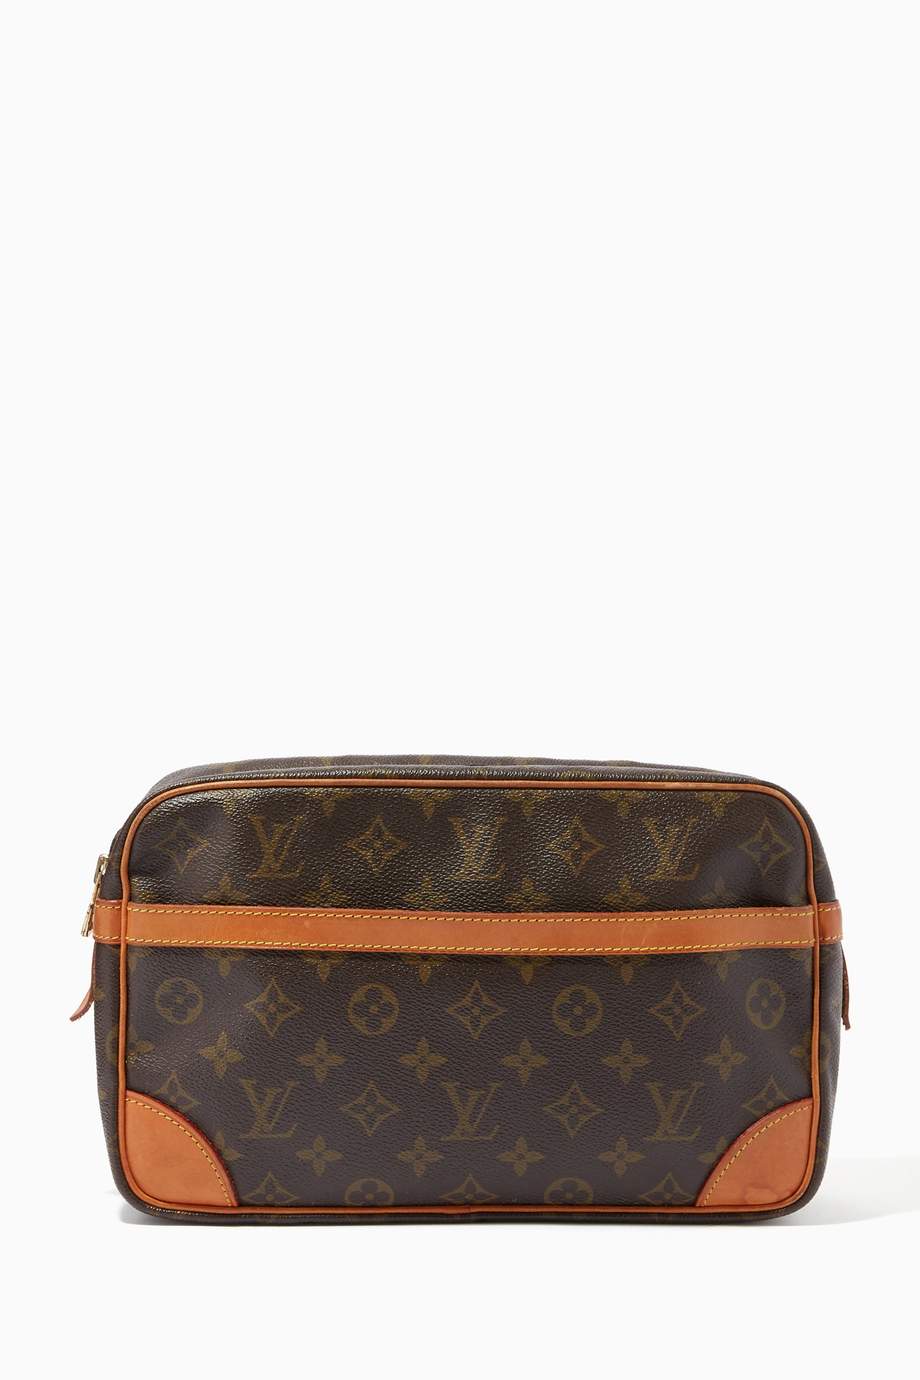 Shop Louis Vuitton Vintage Brown Compiegne 28 Clutch Bag in Monogram Canvas for Women | Ounass UAE